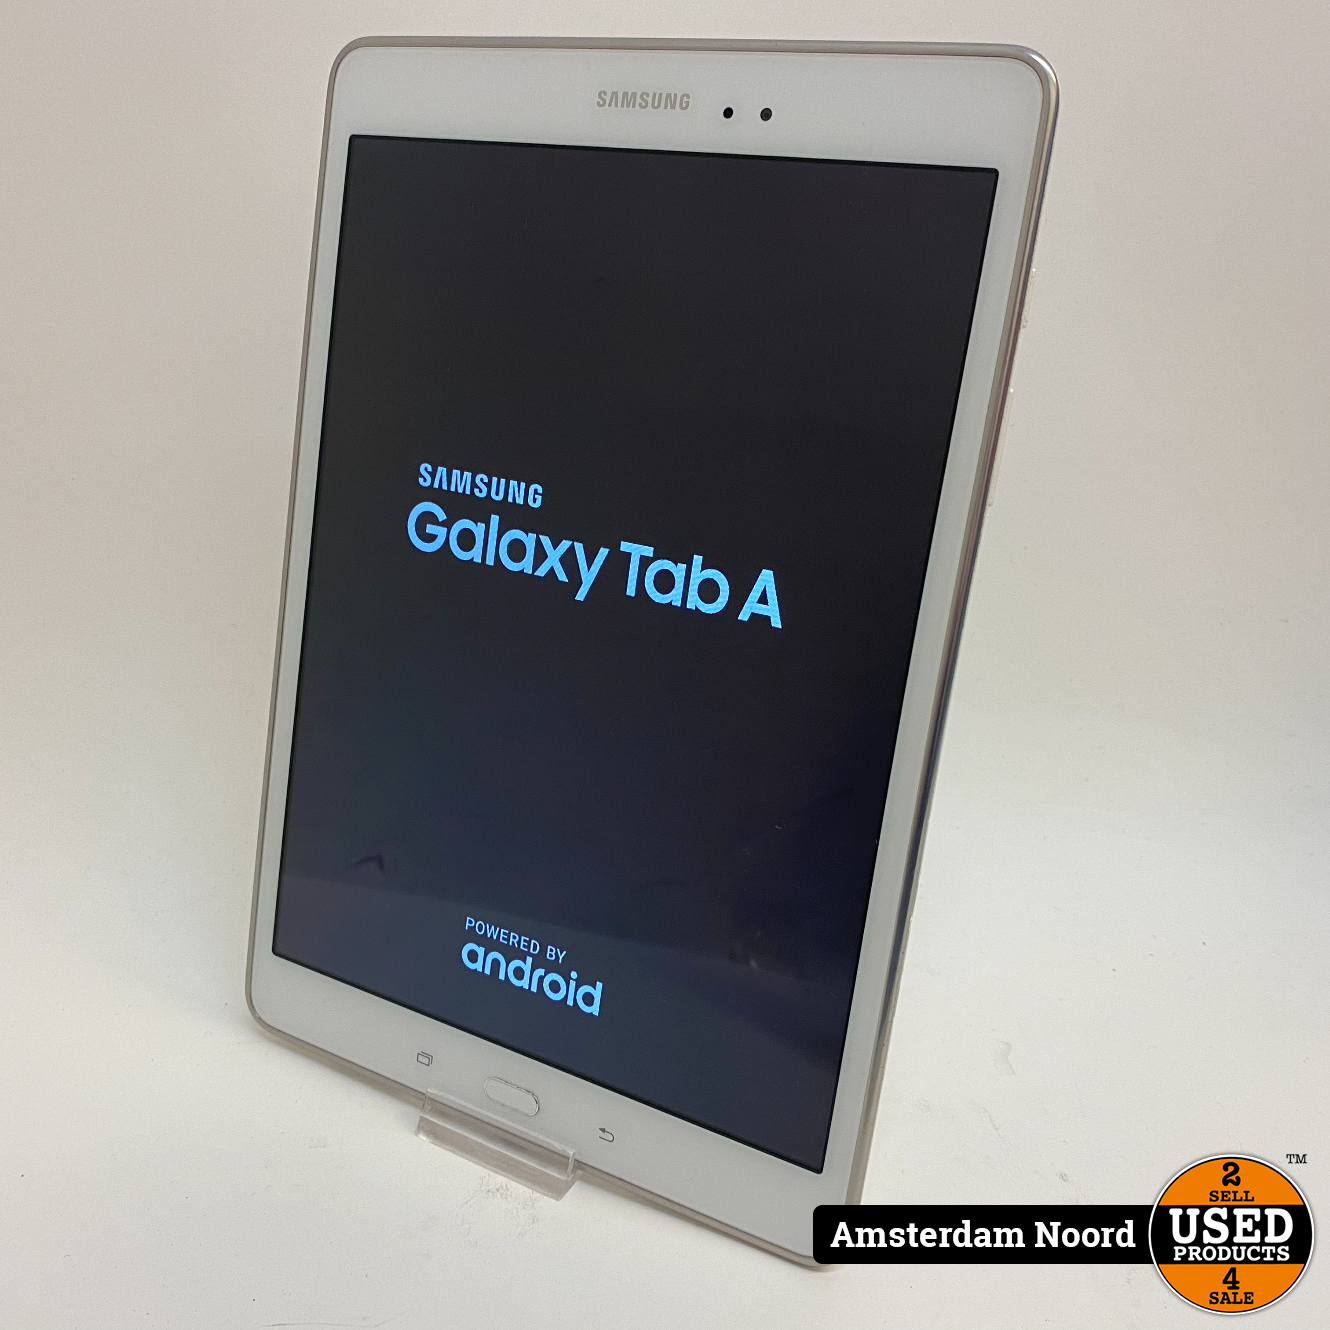 opraken aankleden Mitt Samsung Galaxy Tab A 9.7 Wifi + 4G 16GB Wit (SM-T555) - Used Products  Amsterdam Noord